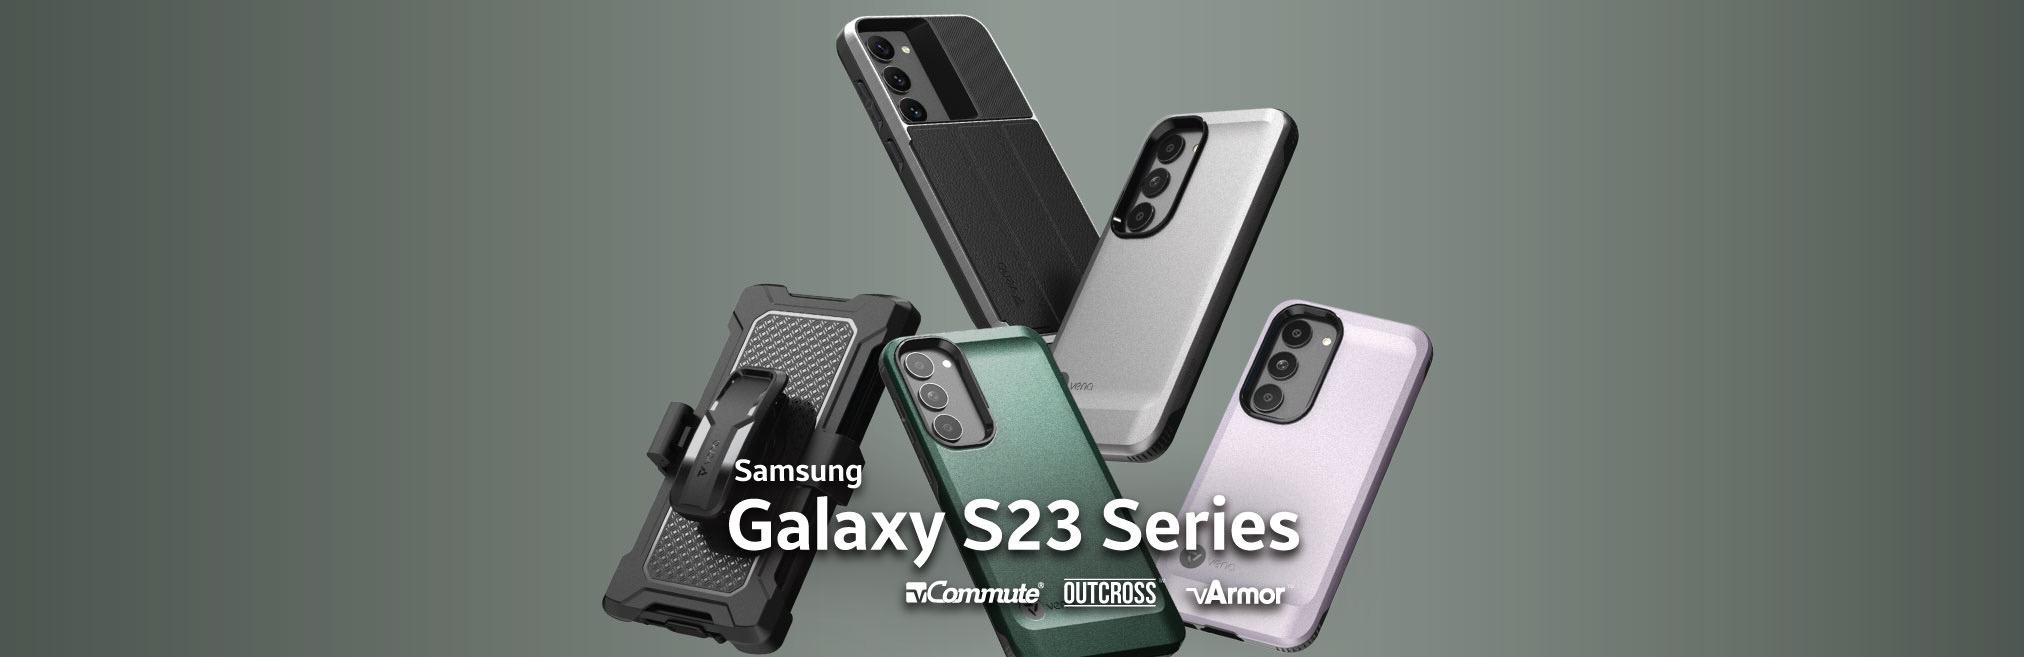 Galaxy S23 Ultra 